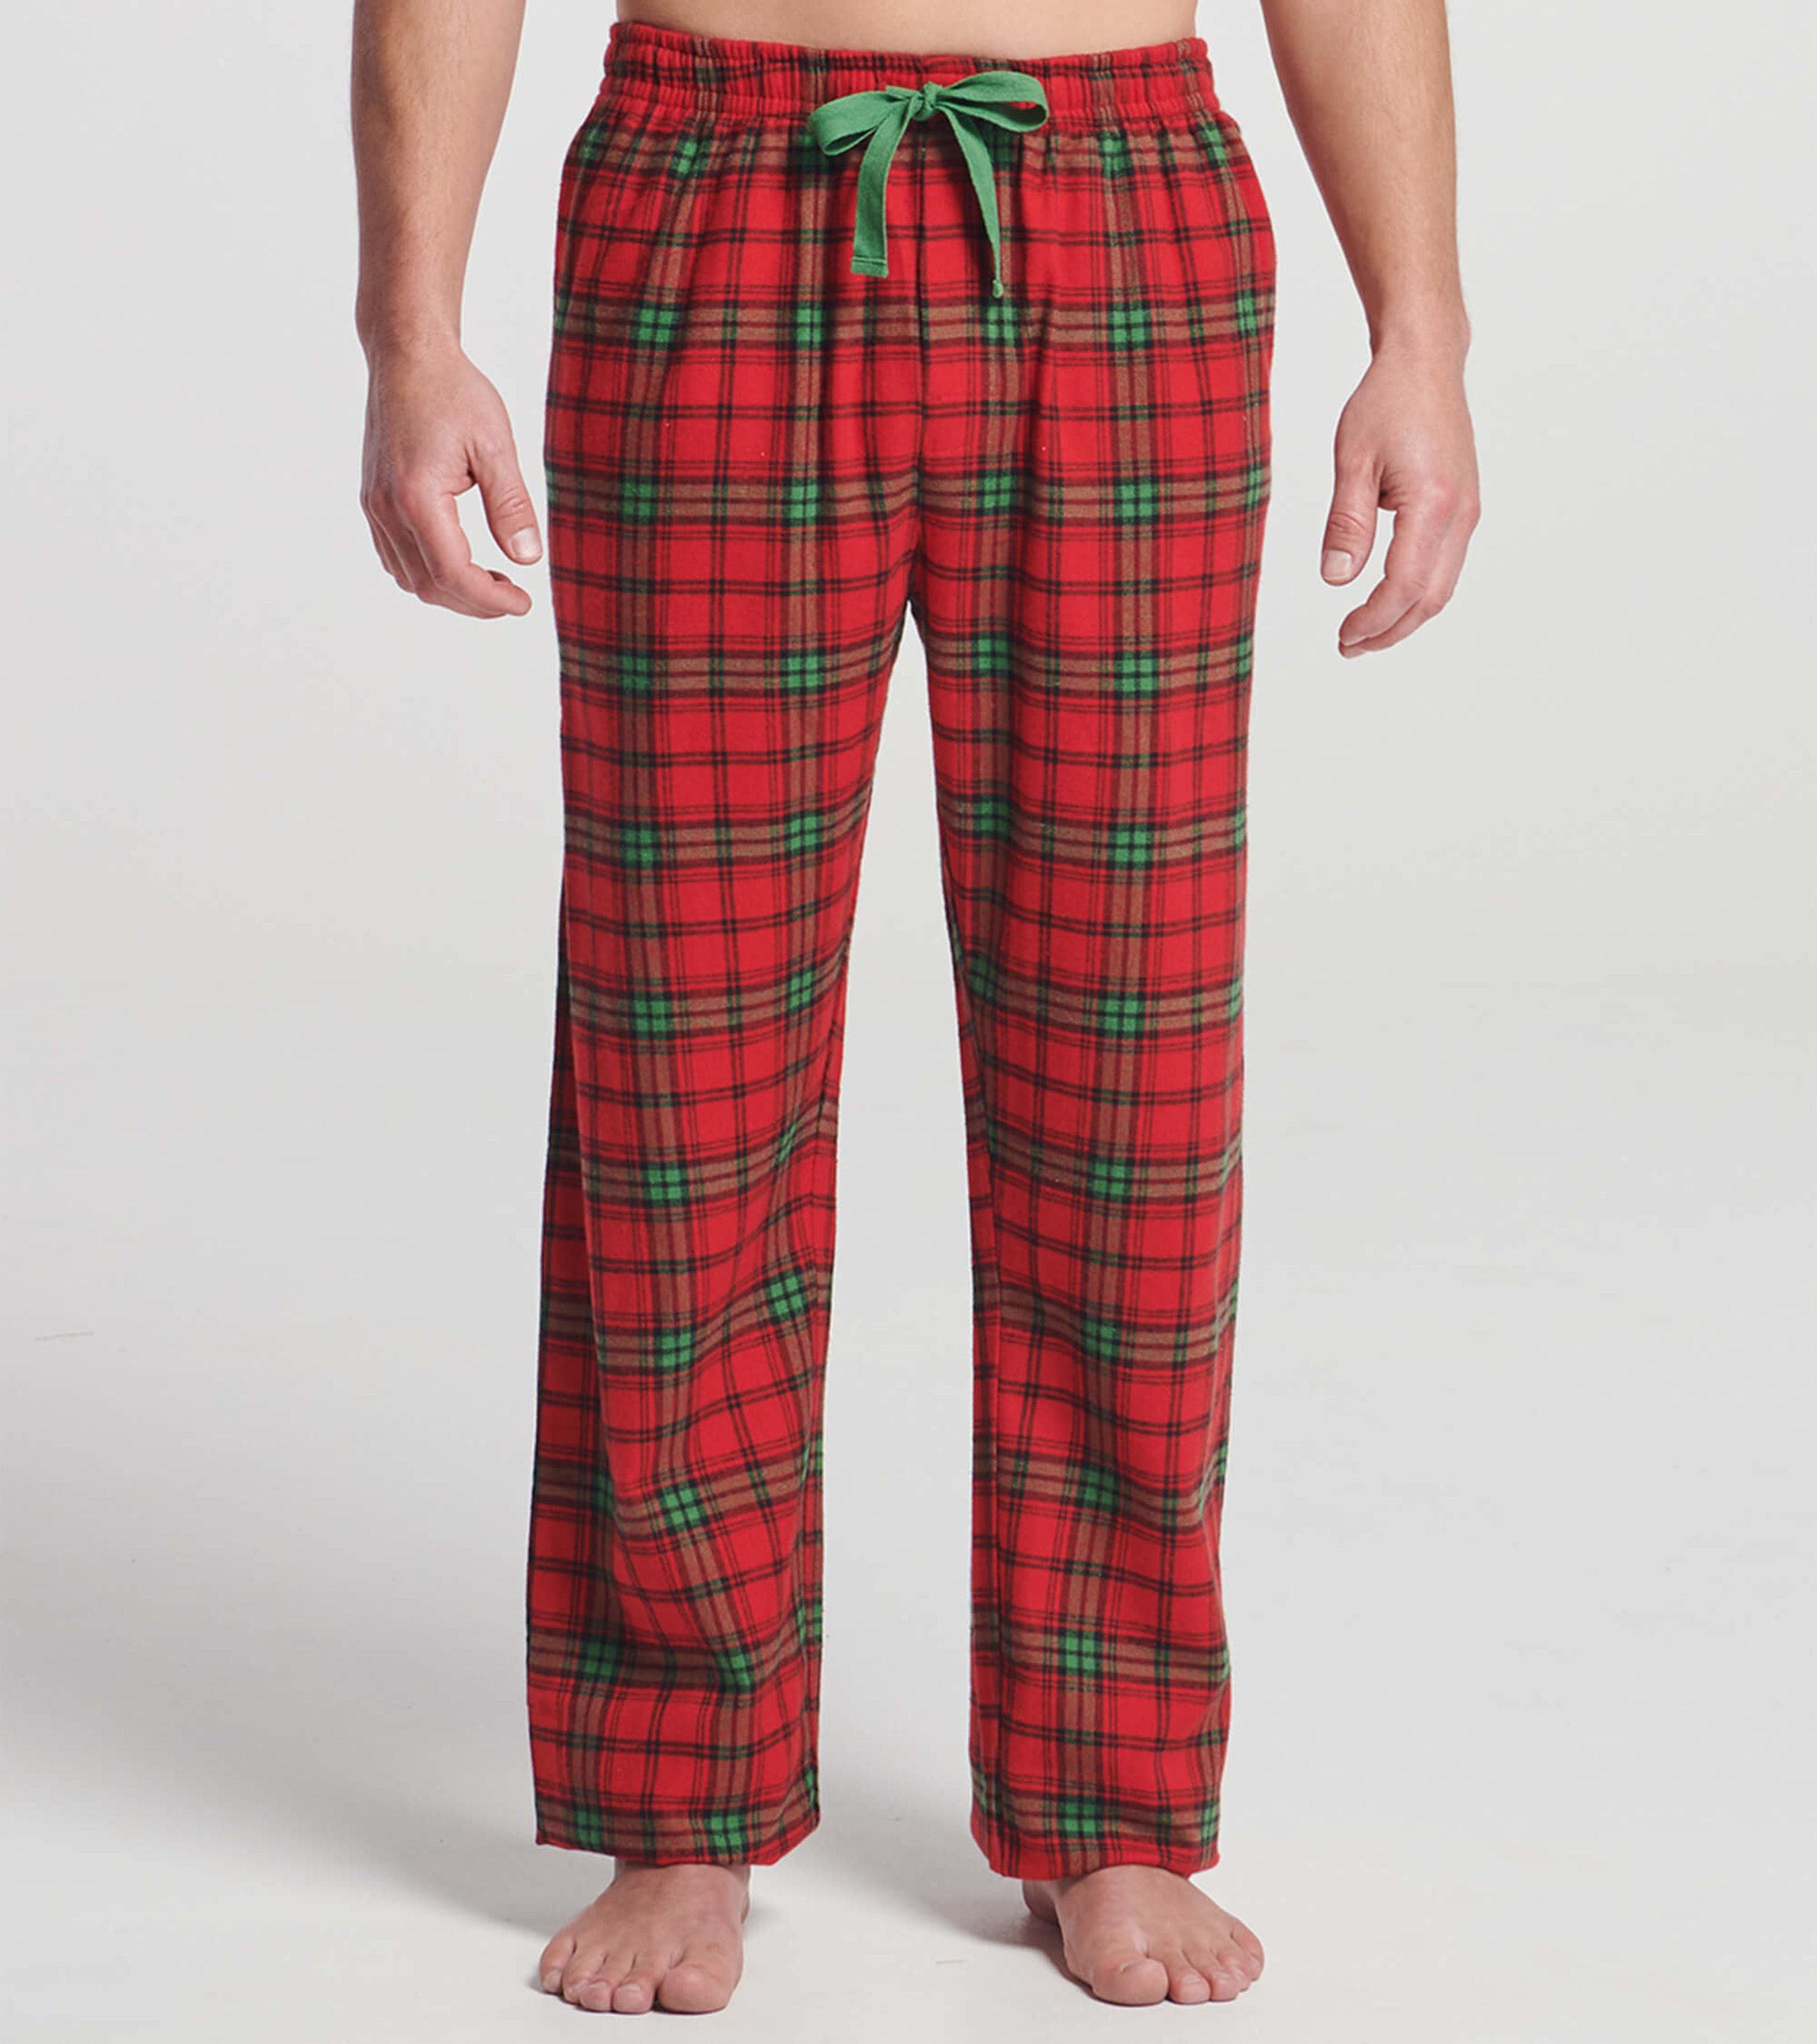 Buy EVERDREAM Sleepwear Womens Flannel Pajama Pants, Long 100% Cotton Pj  Bottoms, Red Plaid, Medium at Amazon.in